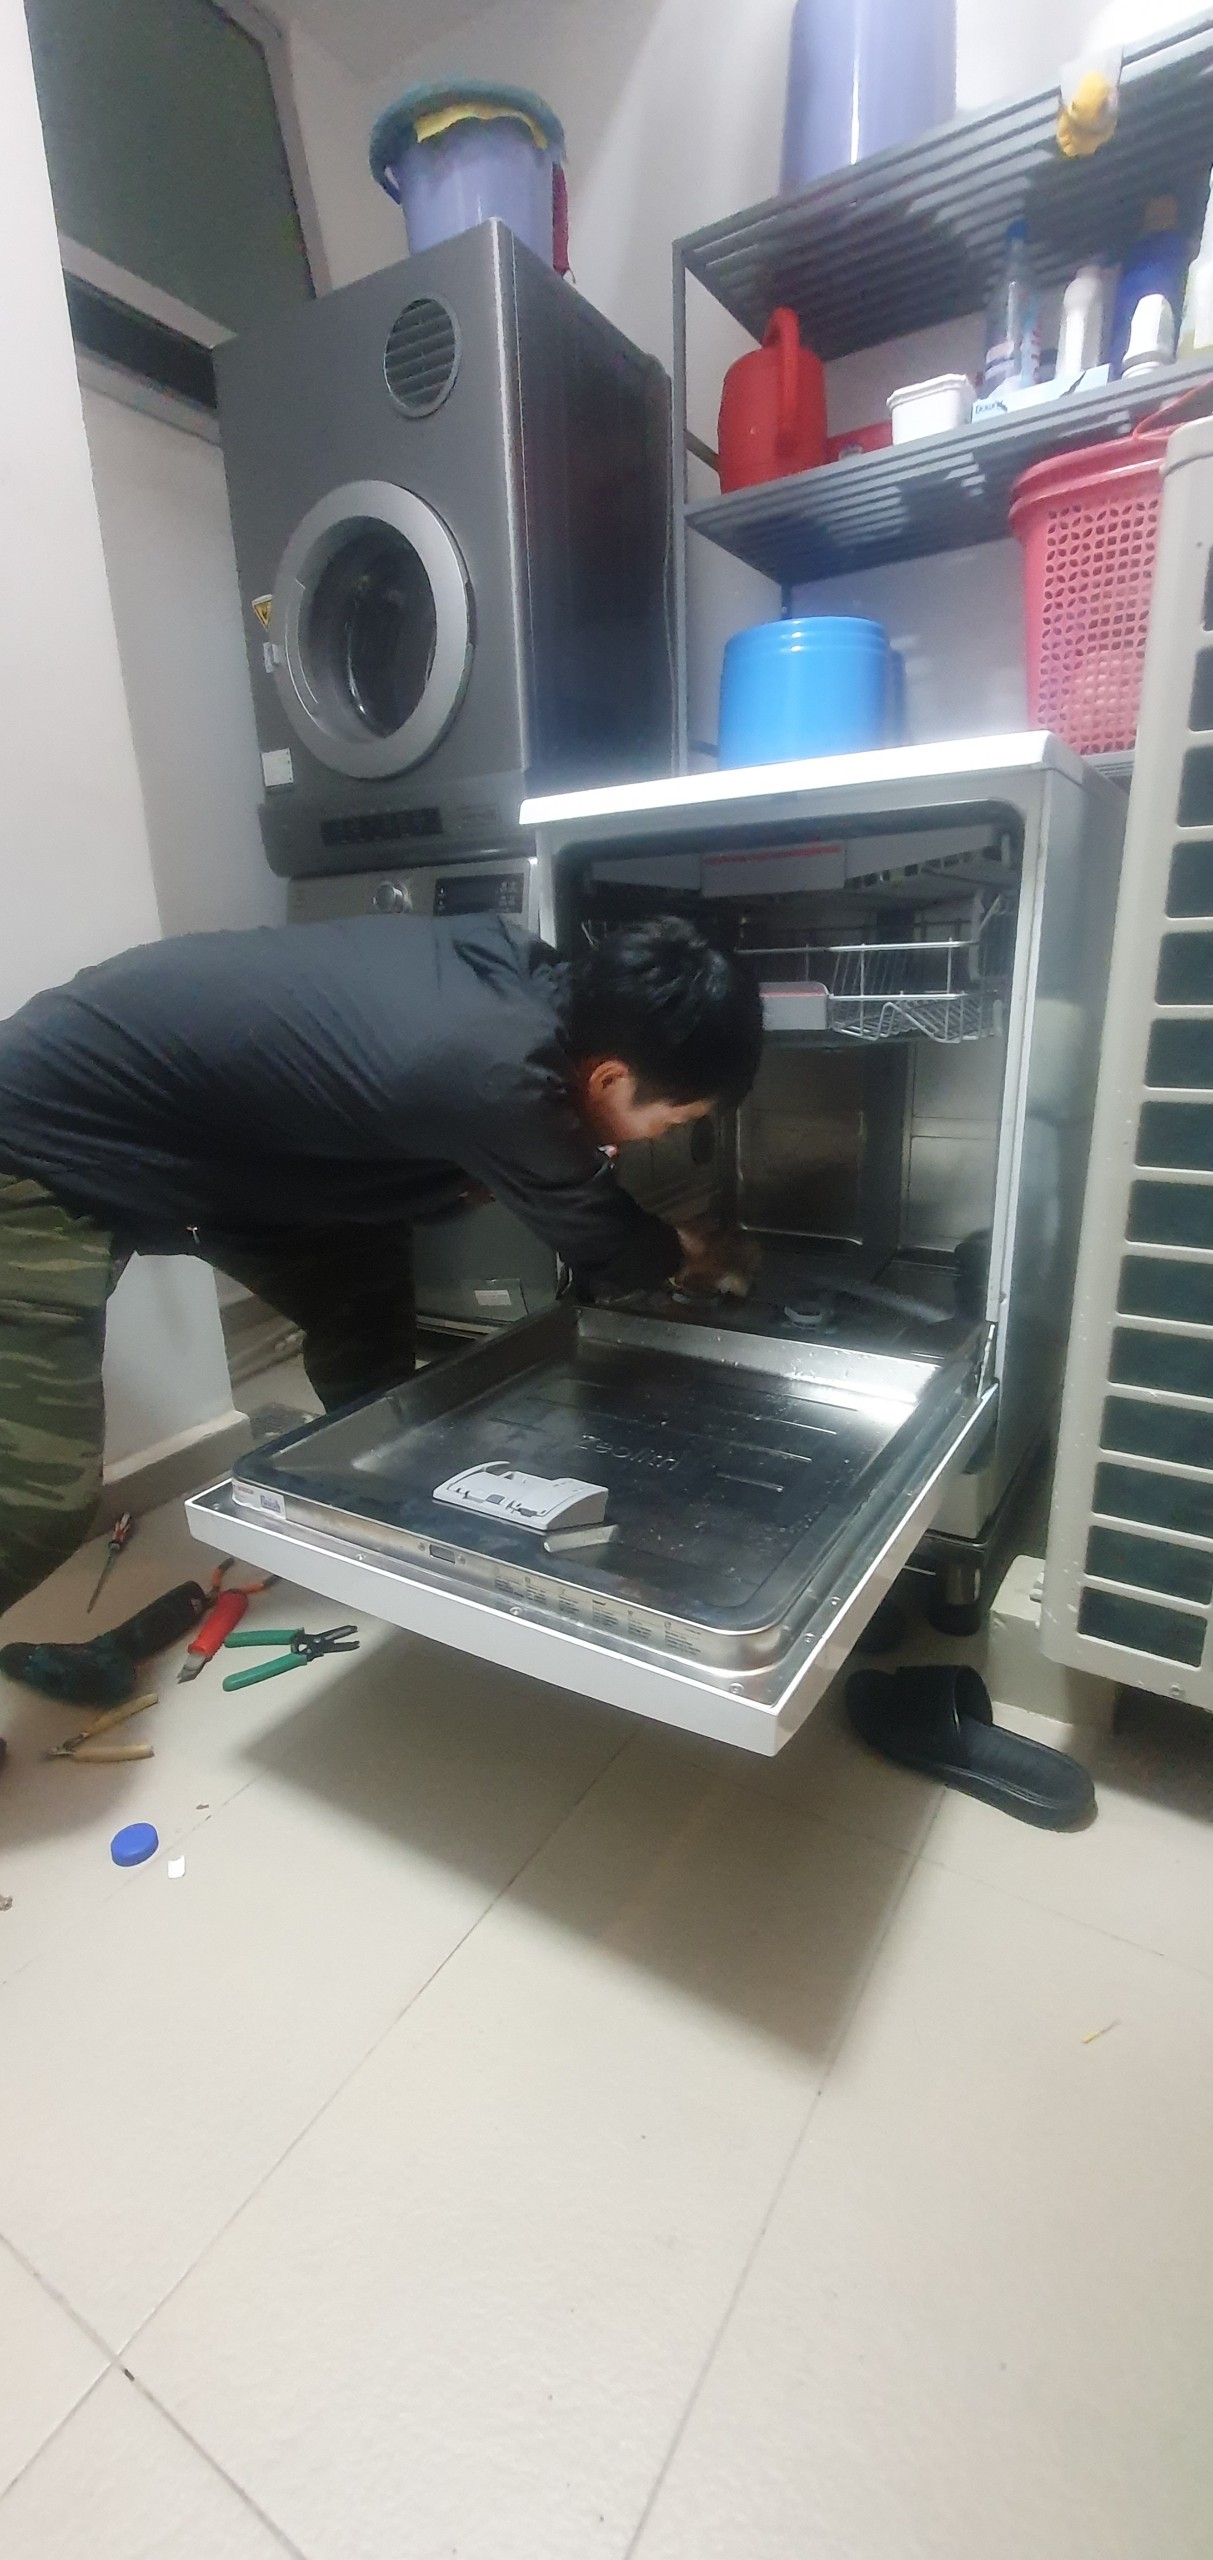 z4449111397564 2171007b1dd8ebe2746bb84bee128482 - Sửa máy rửa bát Bosch tại Sài Gòn